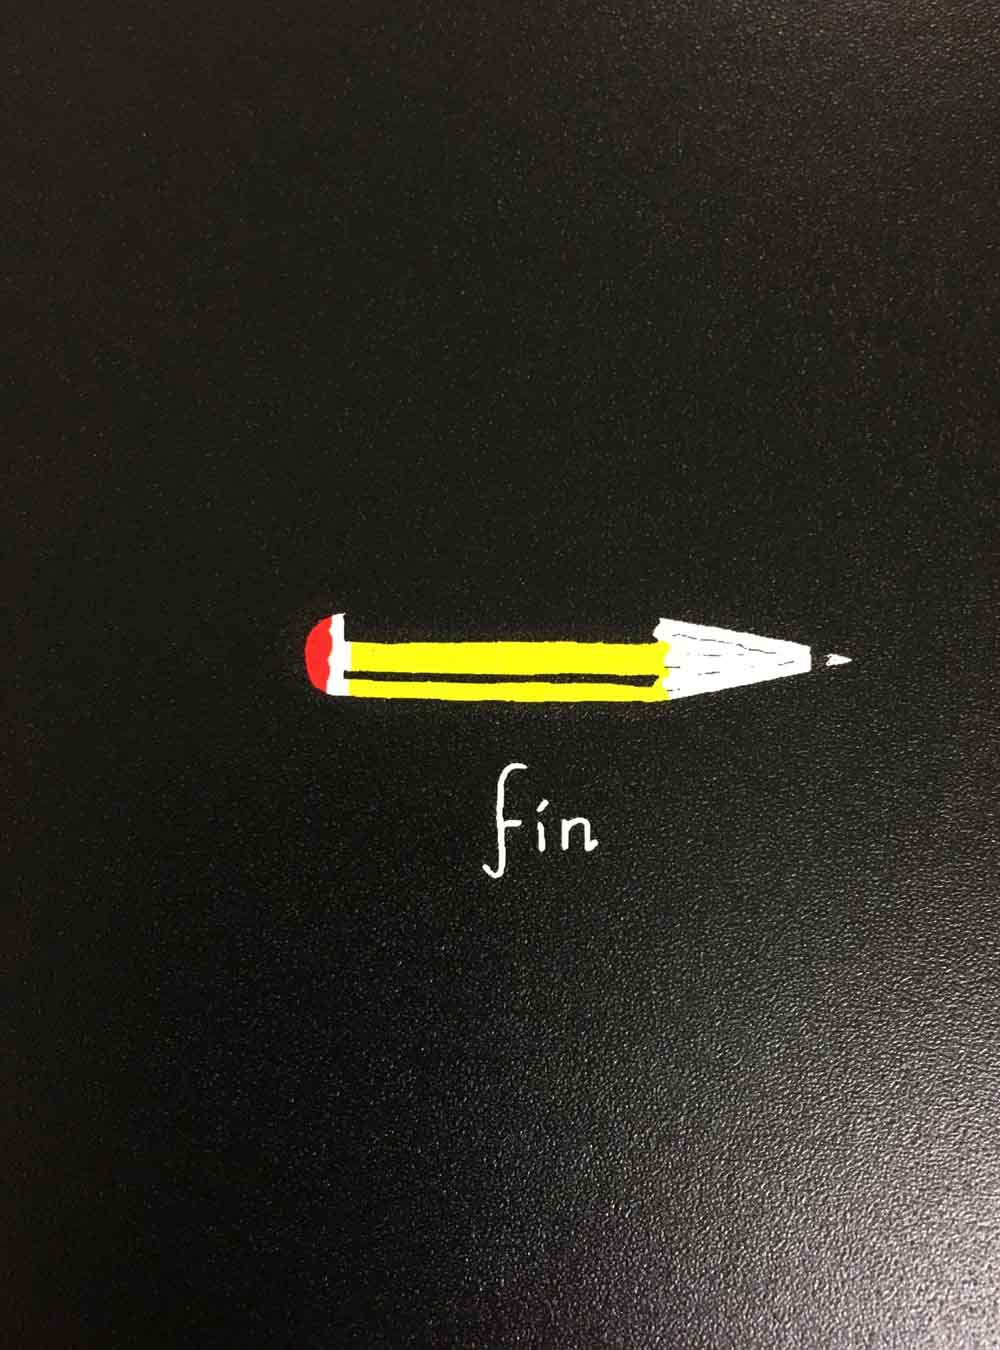 Pencil 'Fin', 2019 Enlarged